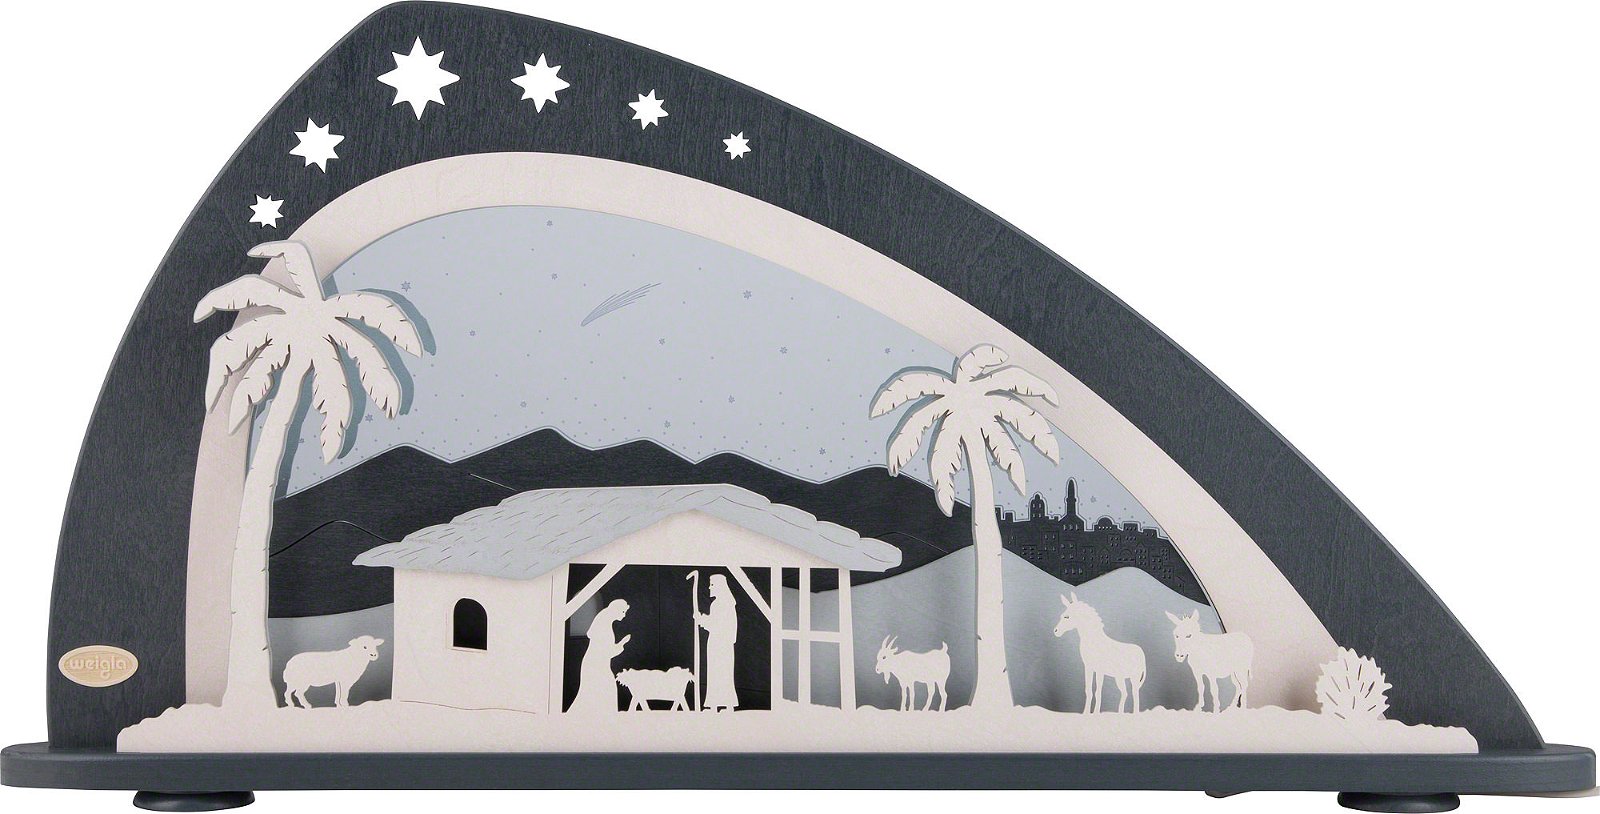 cm) Holzkunst von Schwibbogen (66×33,8 Weigla „Bethlehem“